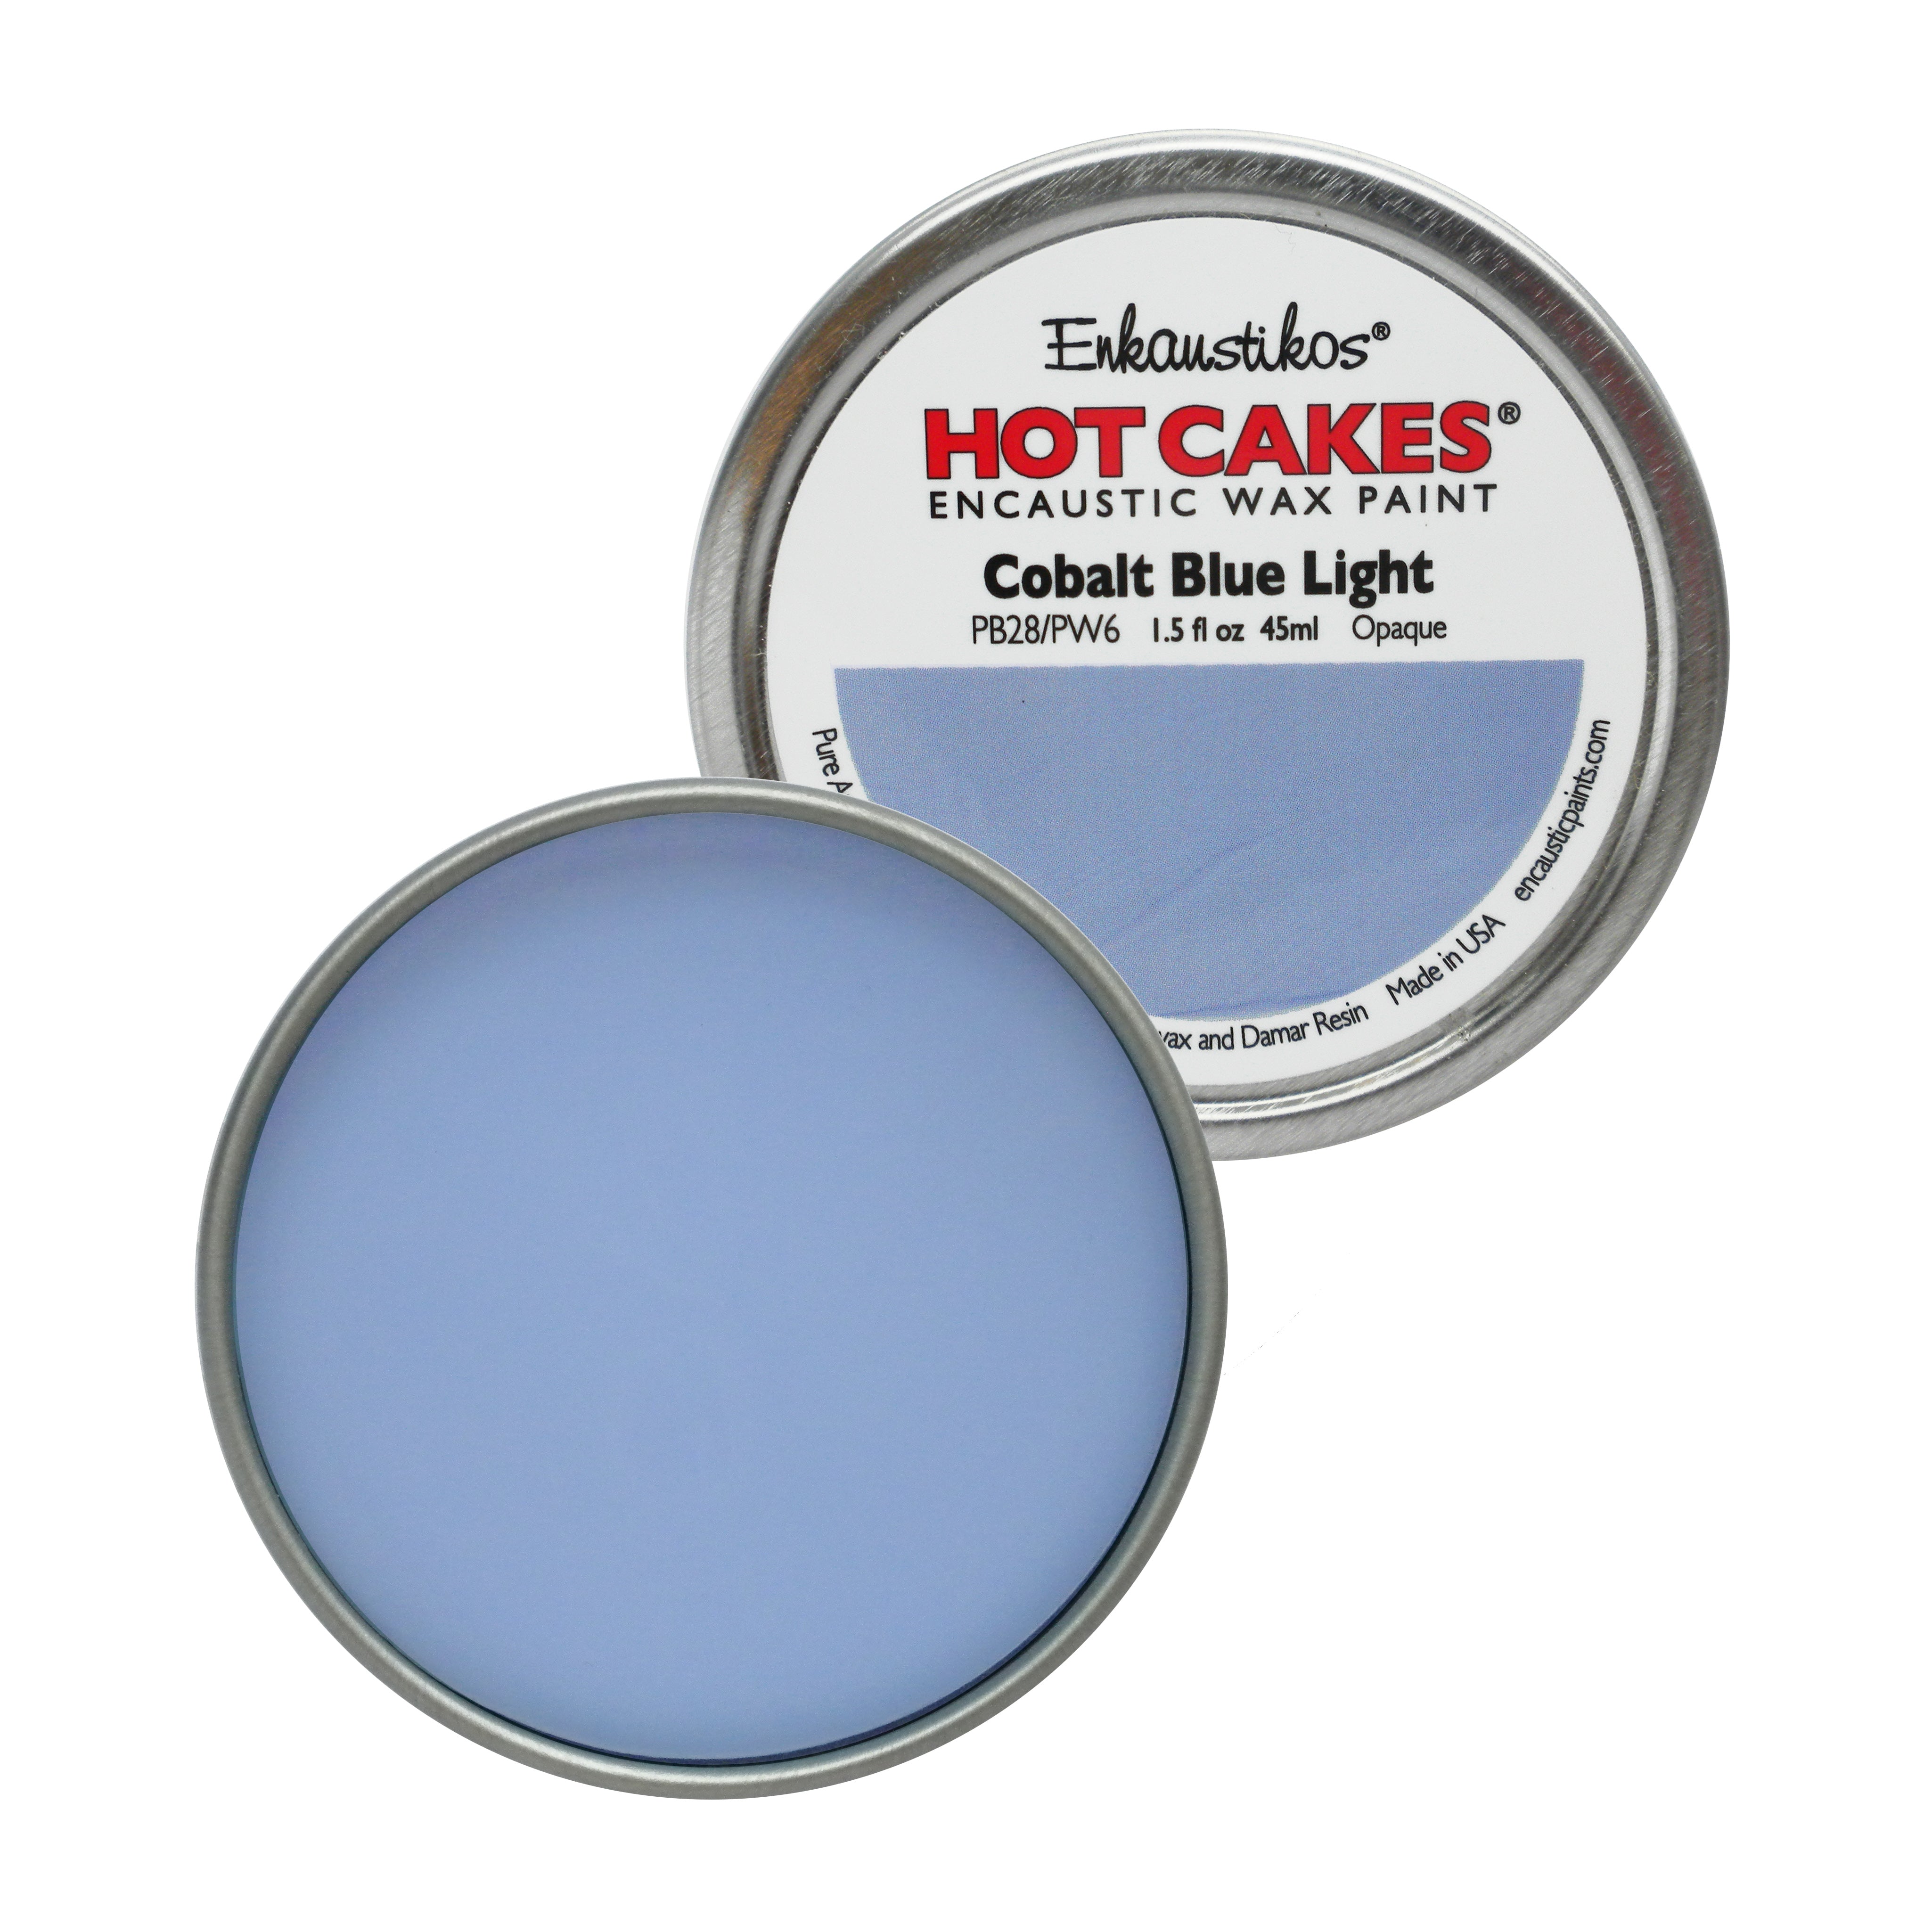 Cobalt Blue Light Hot Cakes